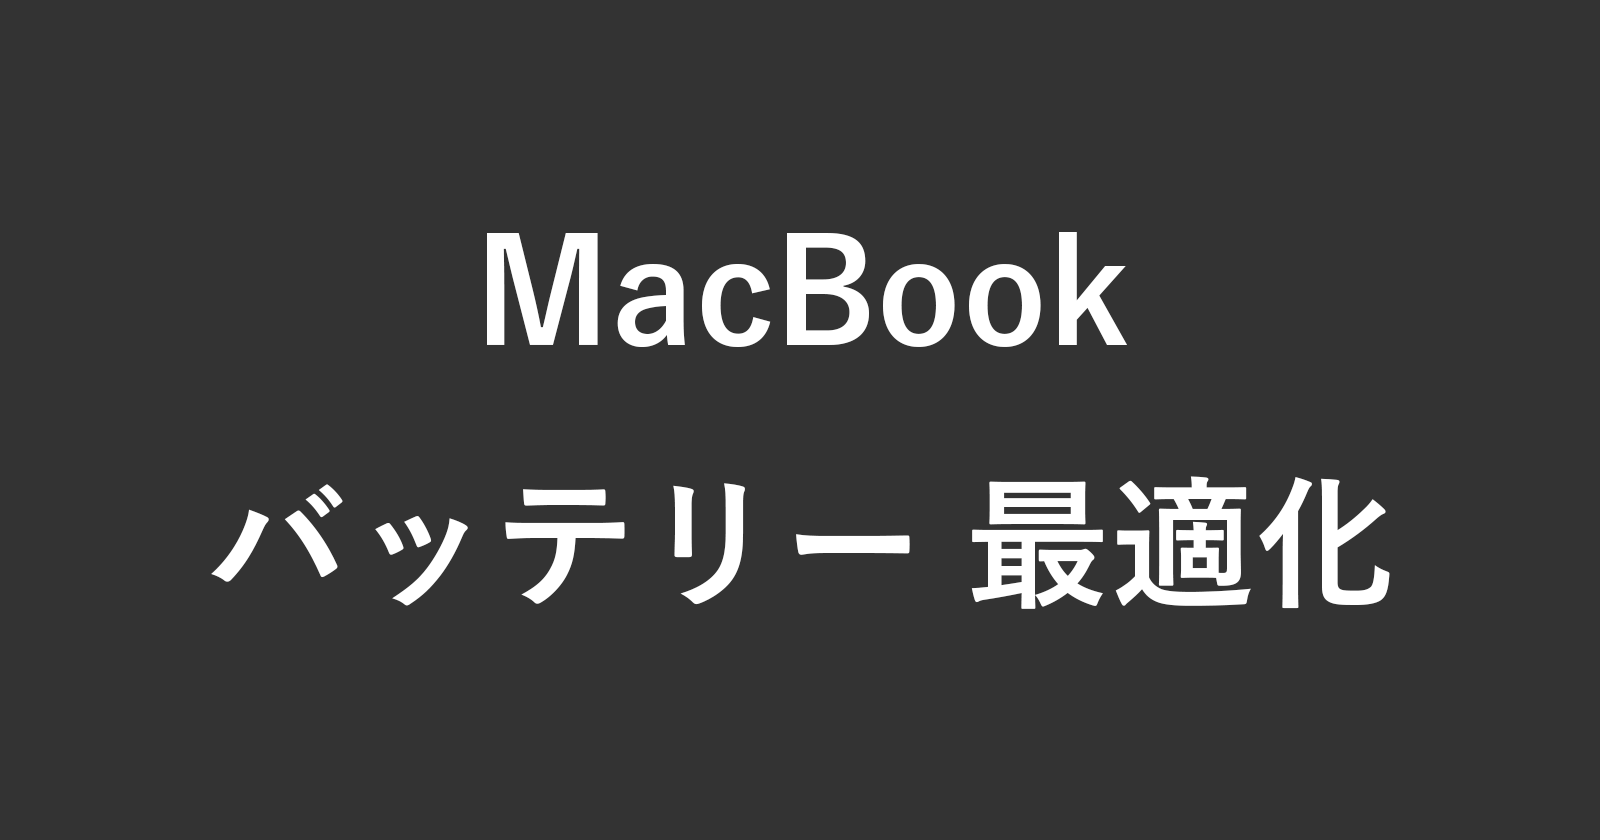 macbook optimised battery